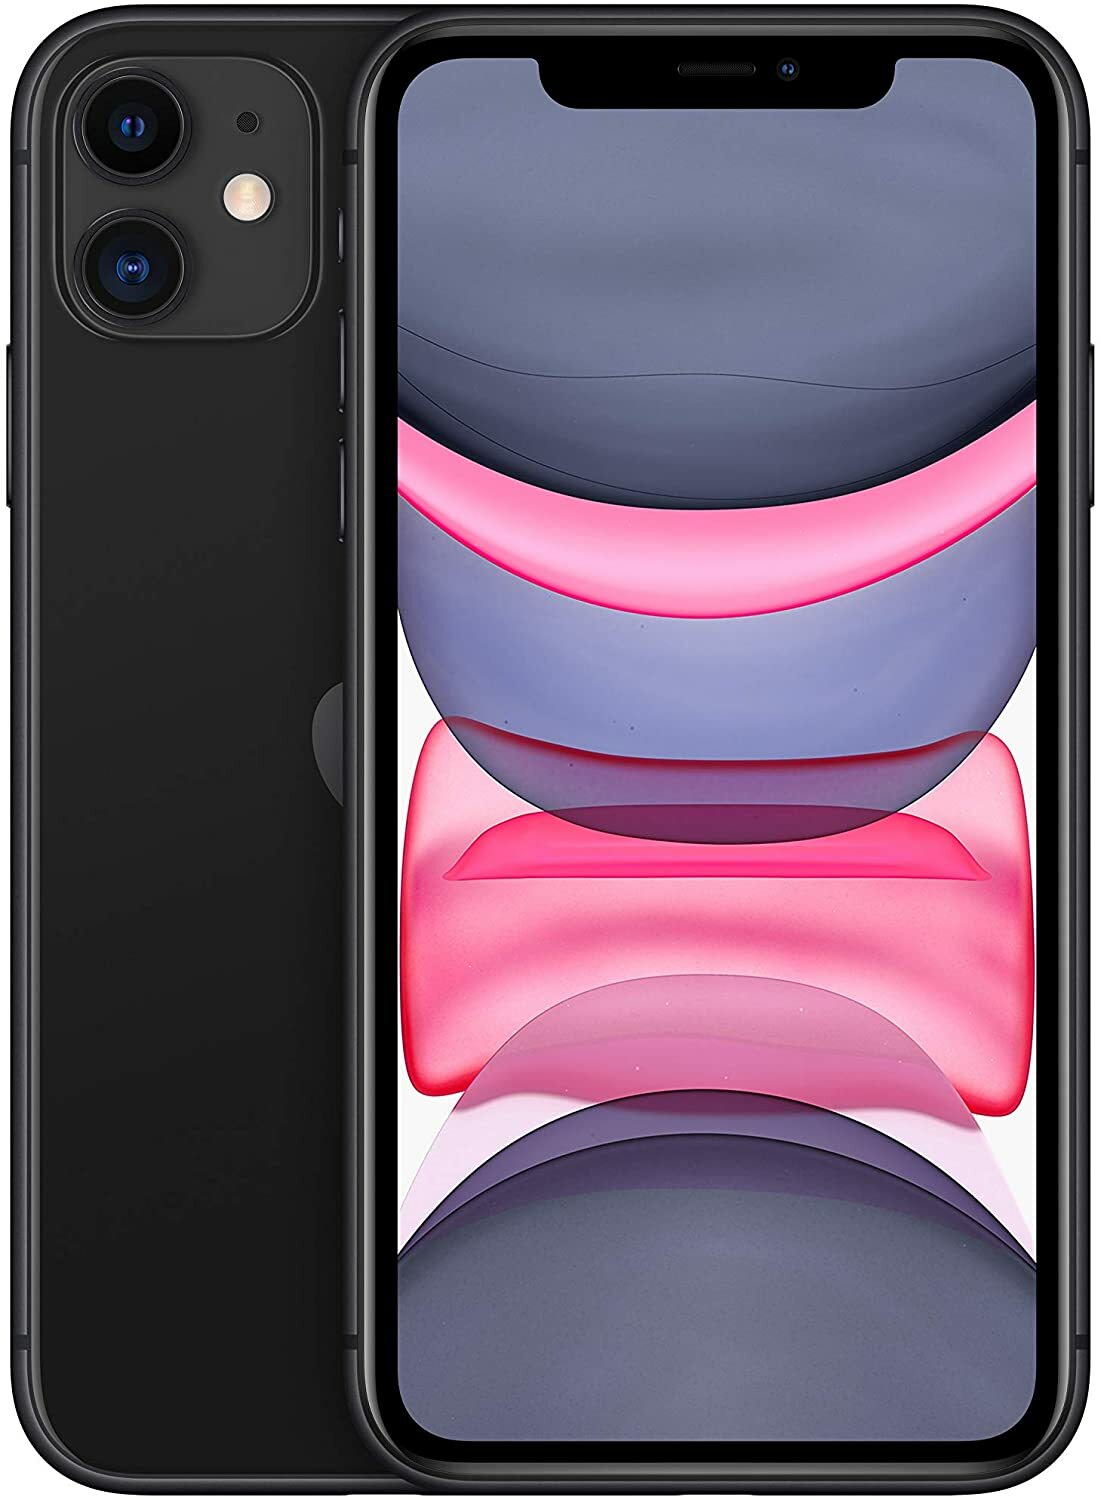 Buy Apple Iphone 11 64gb With Facetime Black International Version Online Shop Smartphones Tablets Wearables On Carrefour Uae